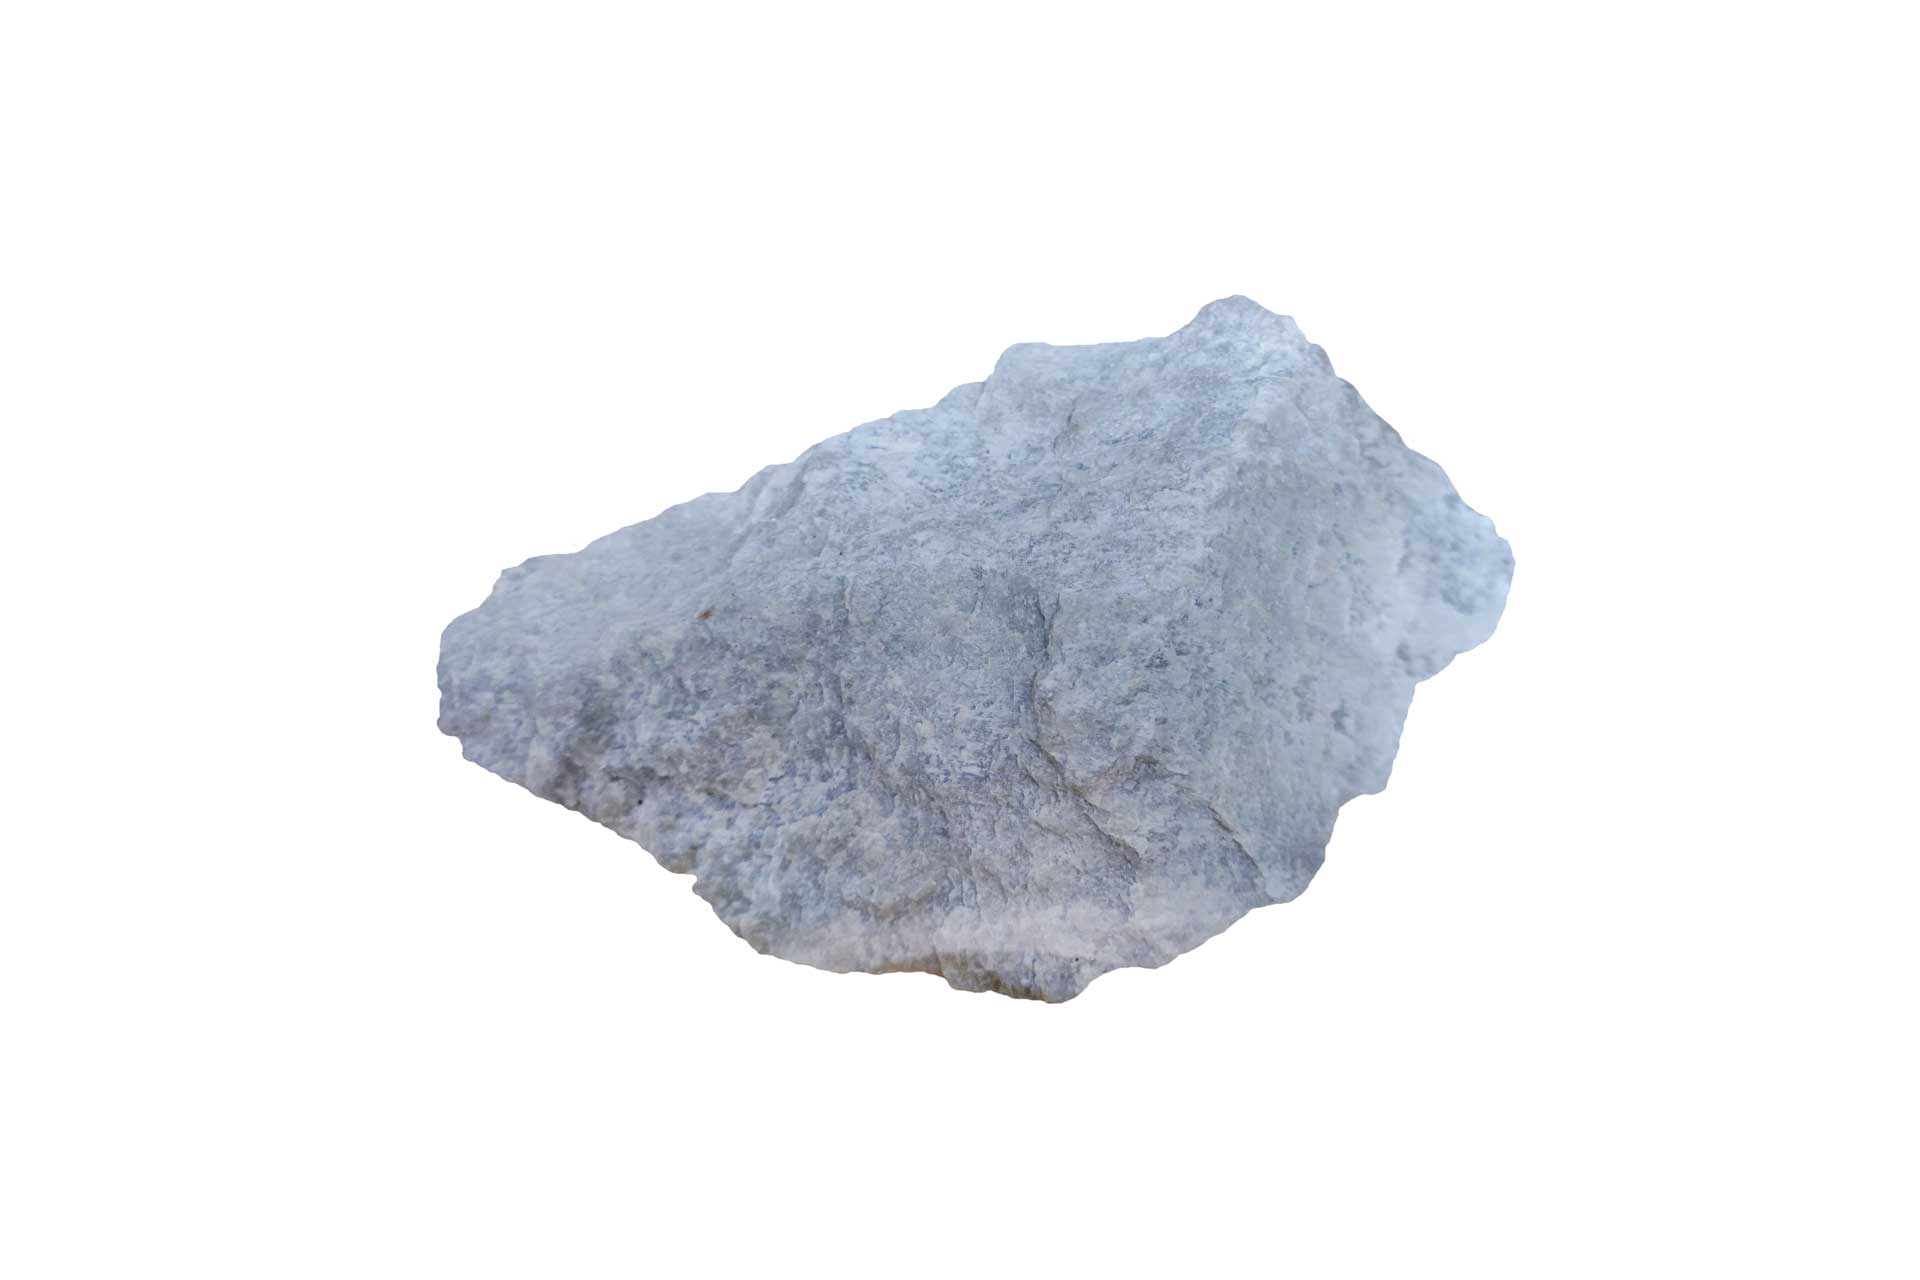 pyrophyllite-rock-isolated-on-white-background